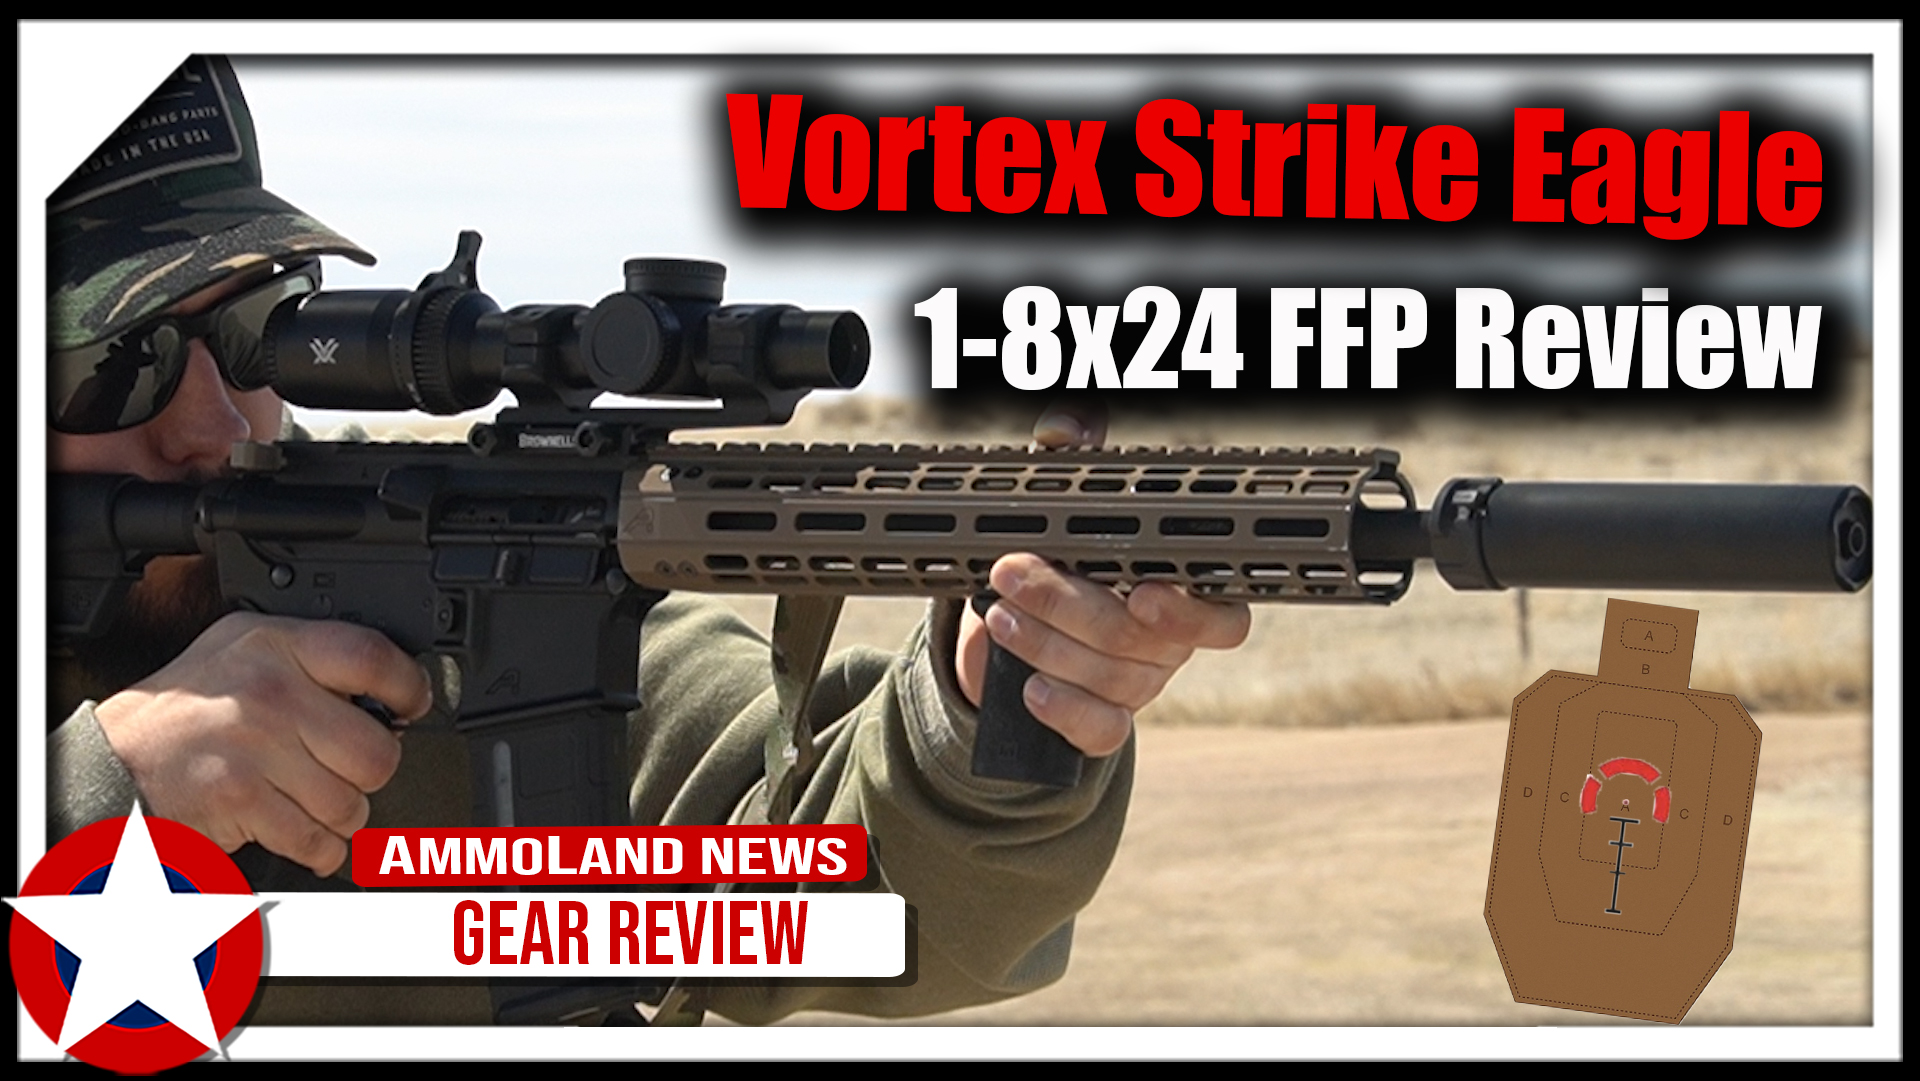 Vortex Strike Eagle 1-6x24 Review